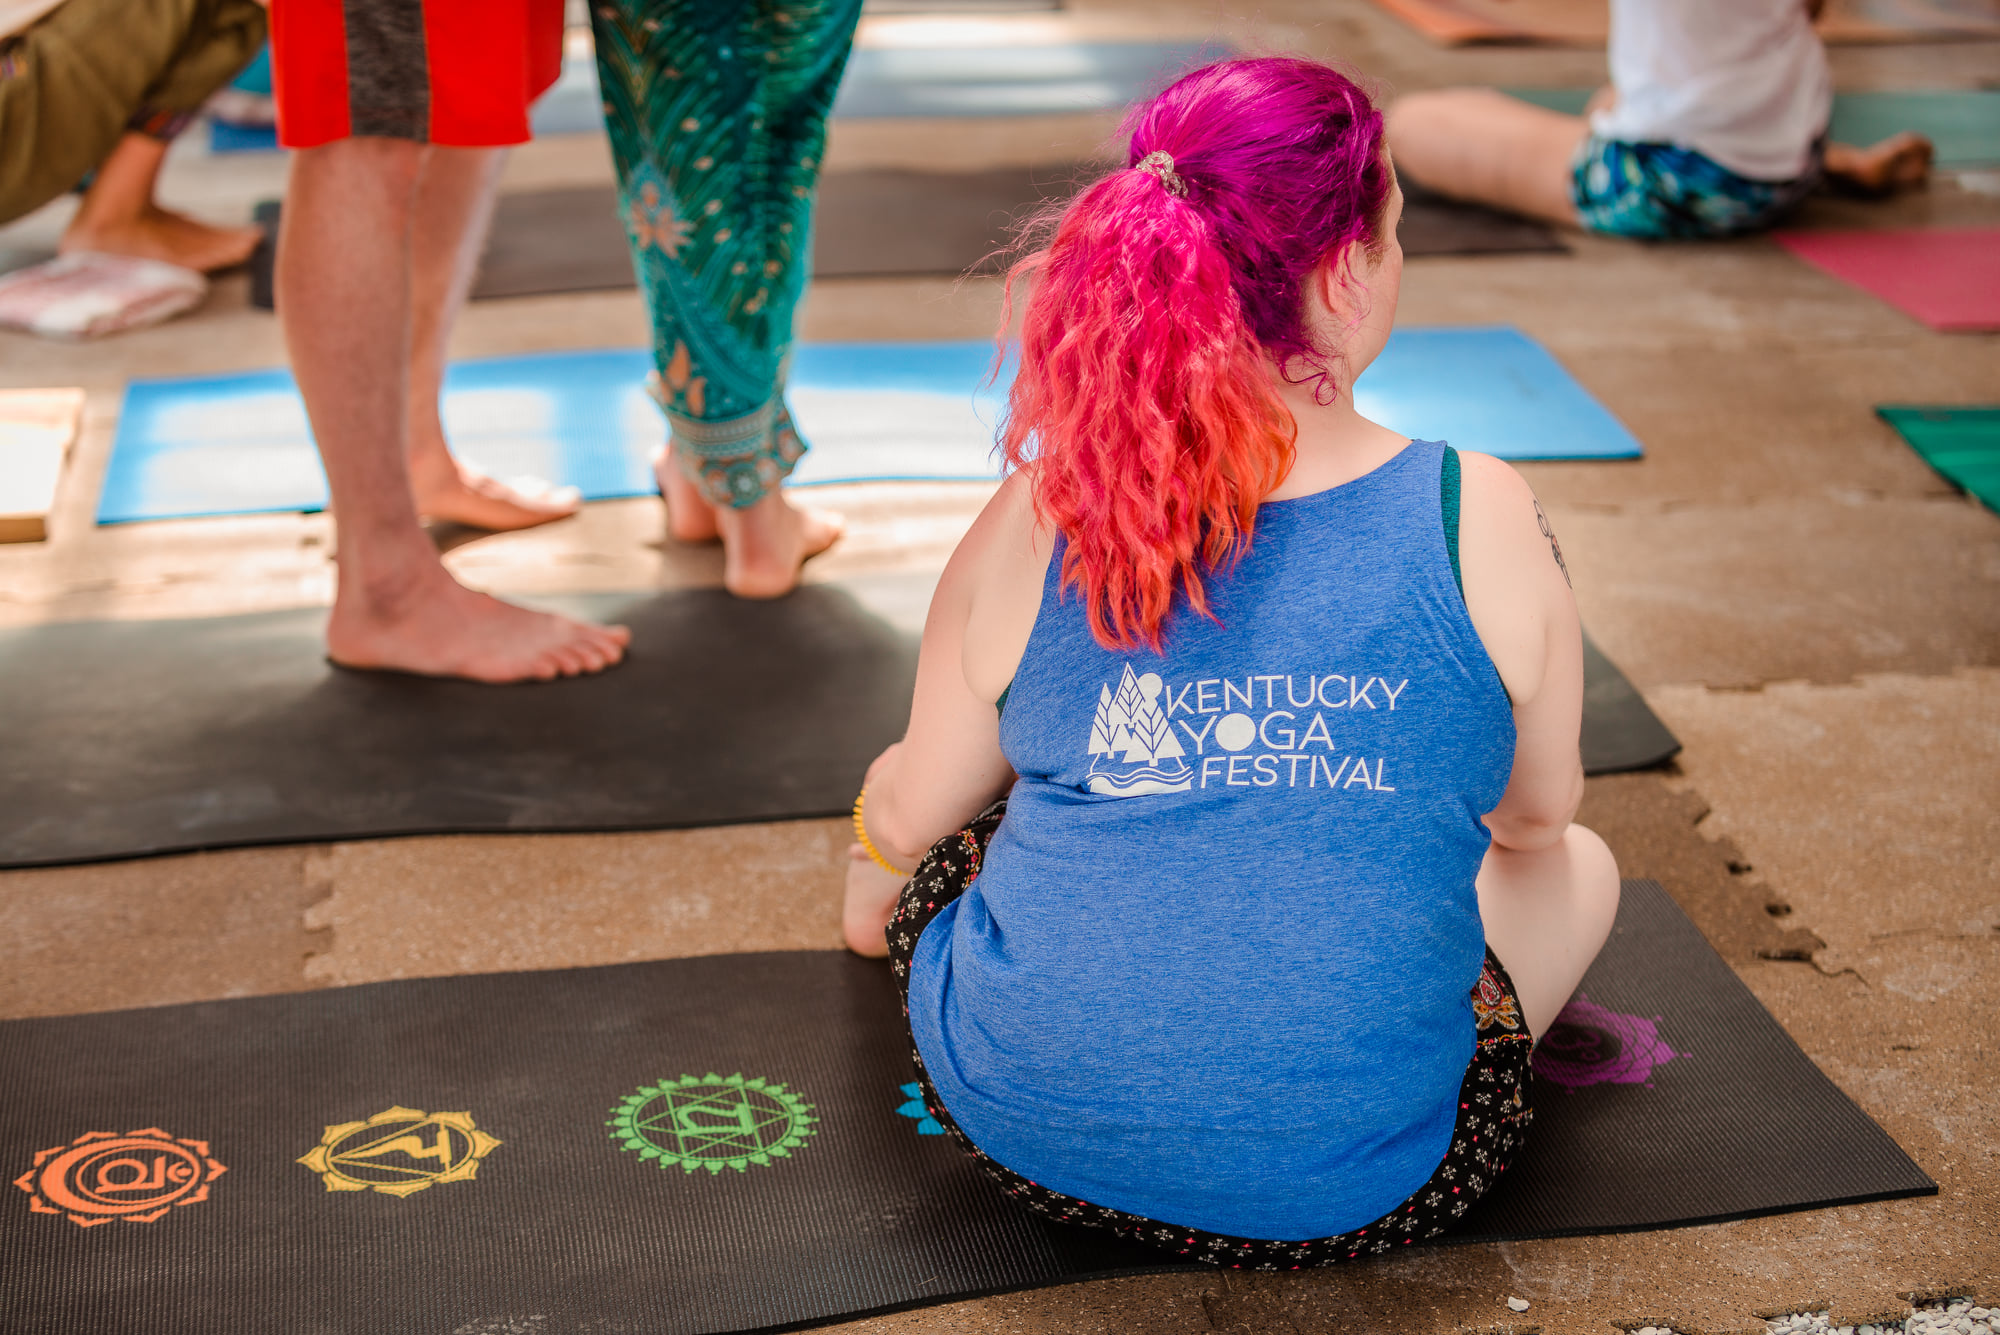 About KY Yoga Fest - A unique outdoor yoga experience